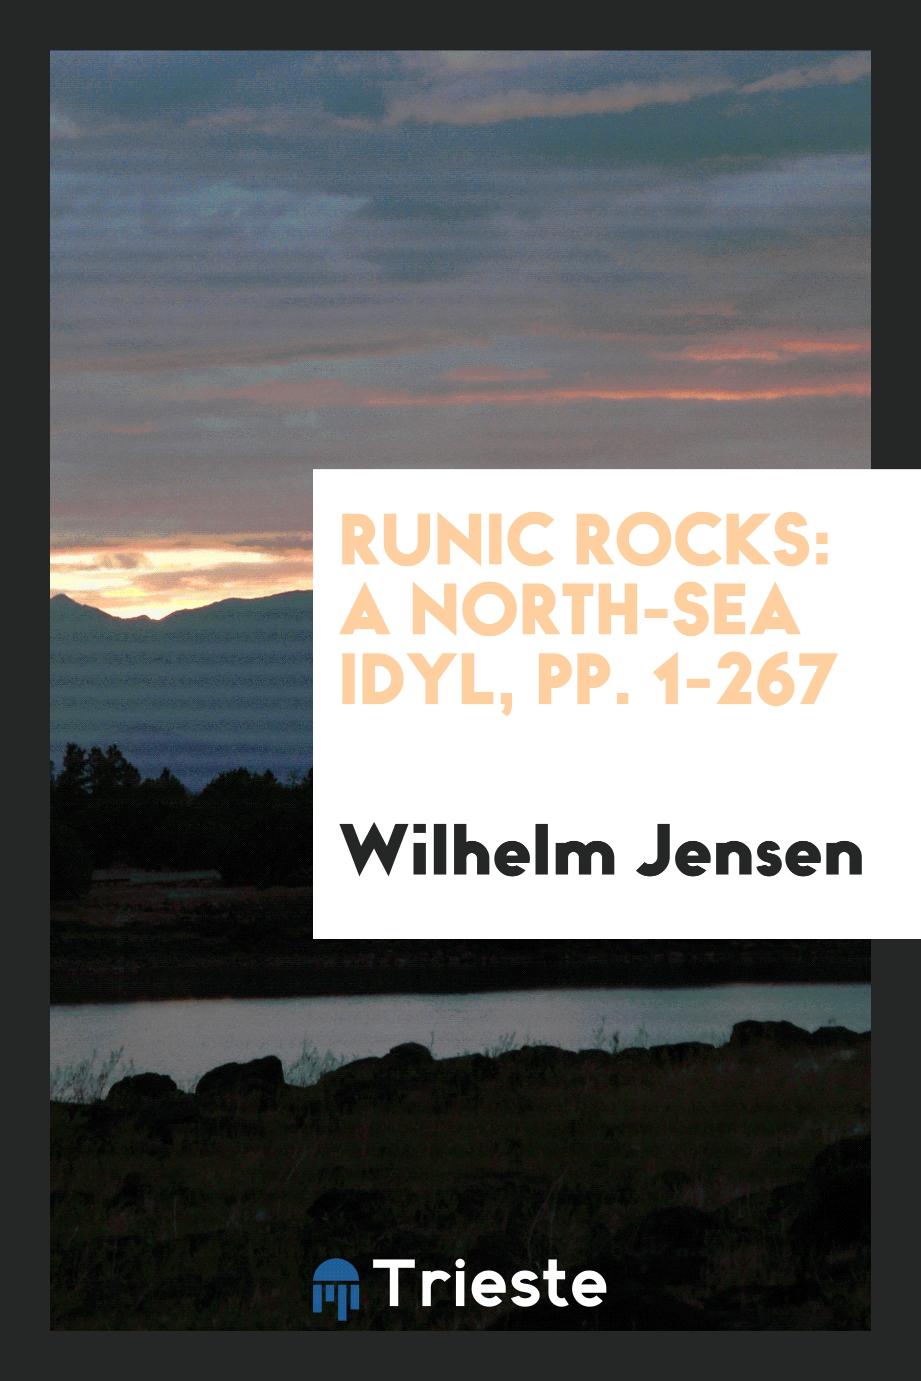 Runic Rocks: A North-Sea Idyl, pp. 1-267